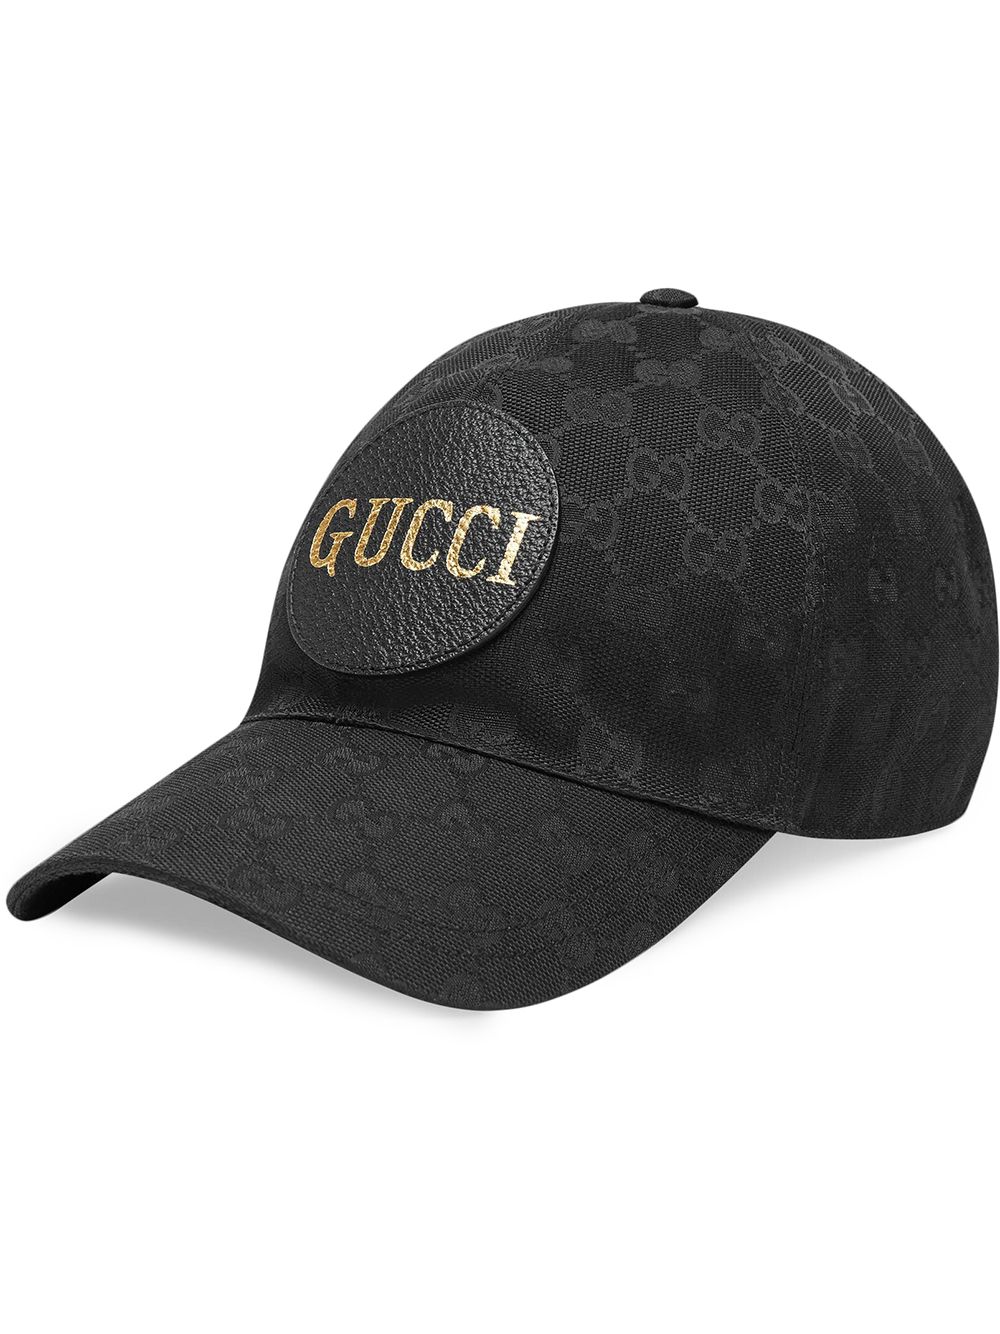 фото Gucci бейсболка с логотипом gg